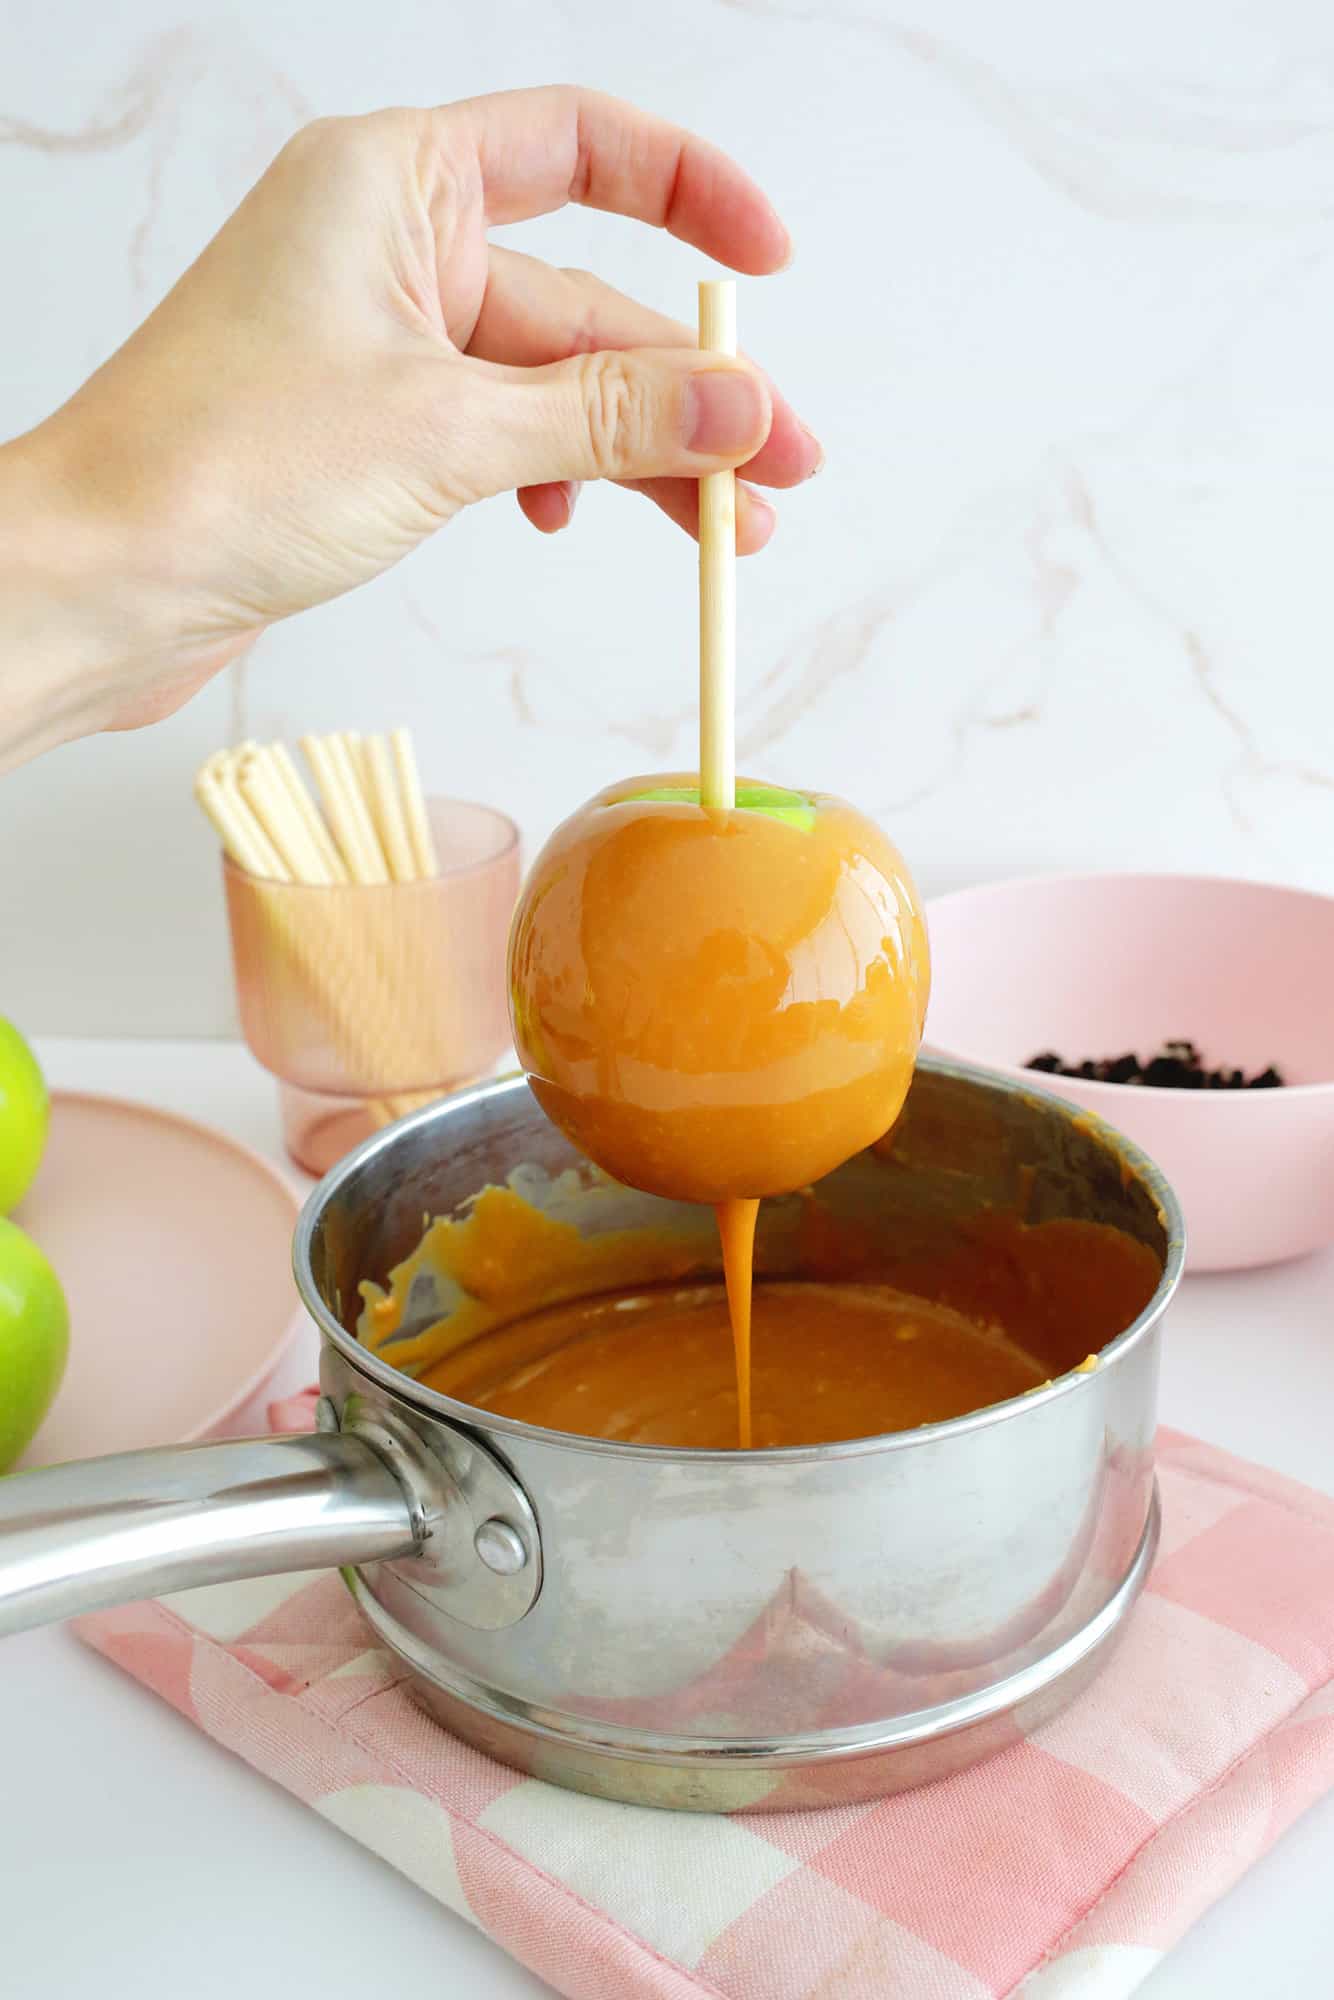 Dipping an apple into caramel for caramel apples